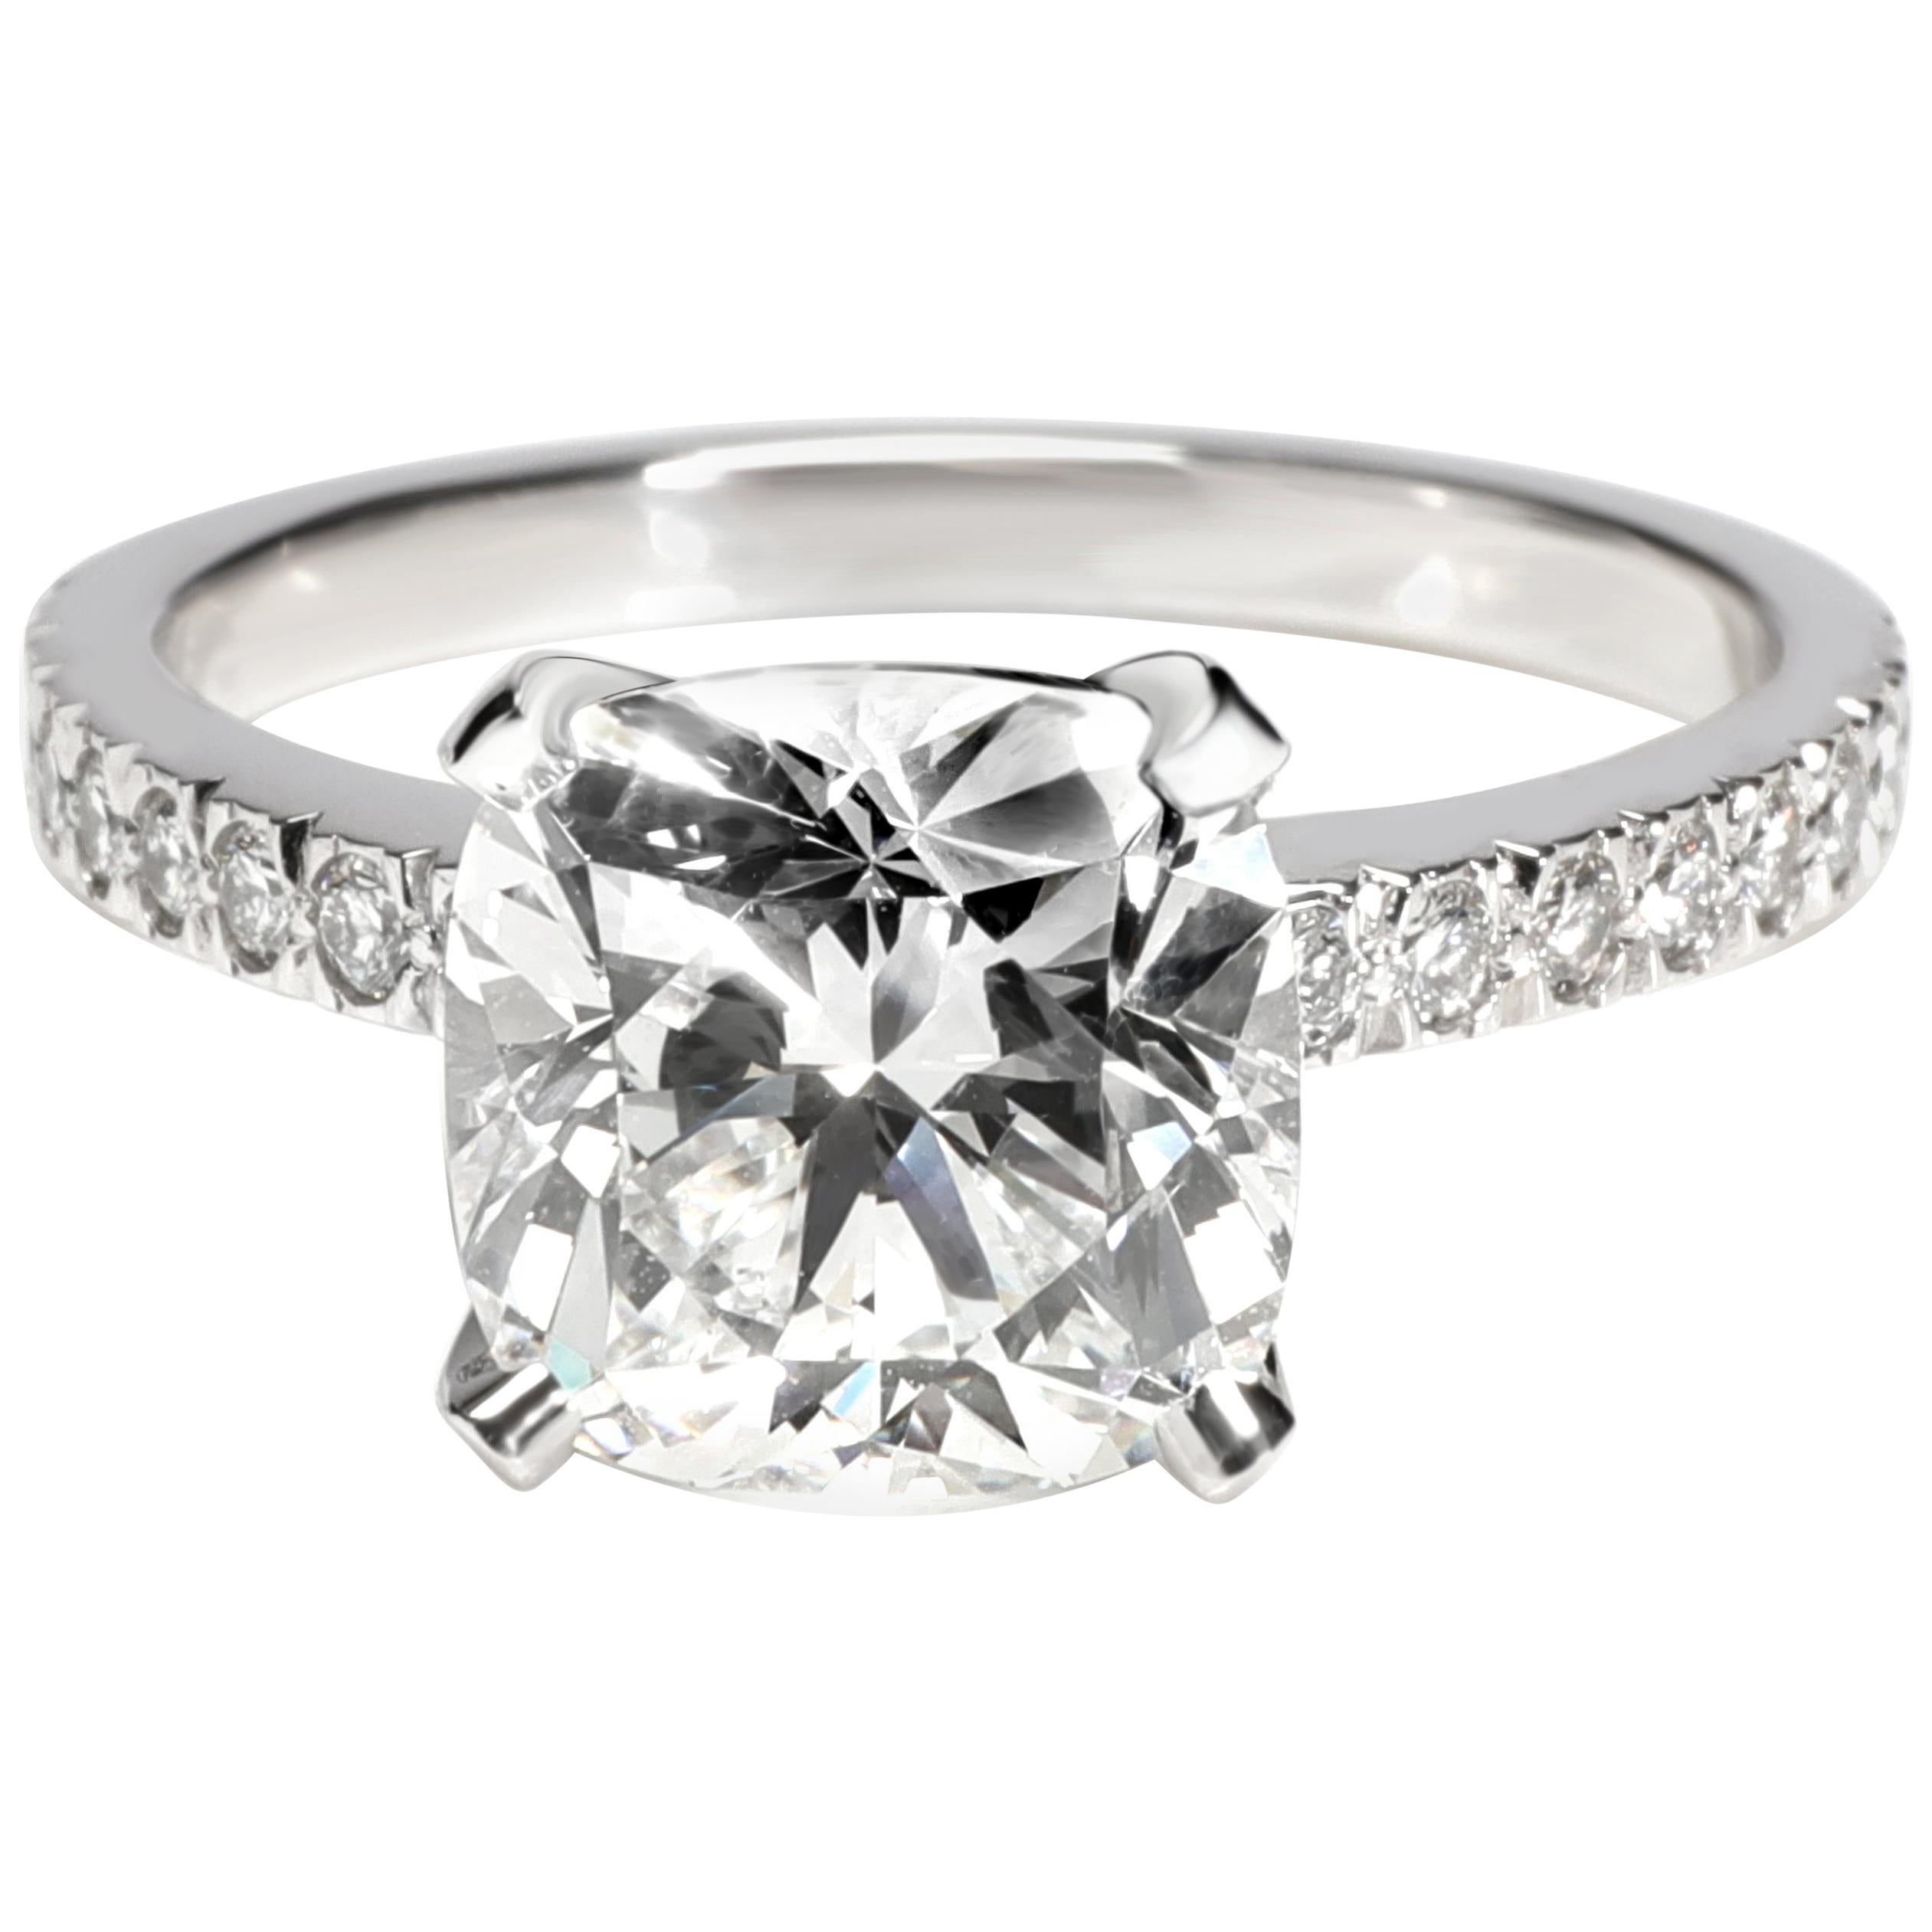 Tiffany & Co. Novo Diamond Engagement Ring in Platinum E VVS1 2.67 Carat